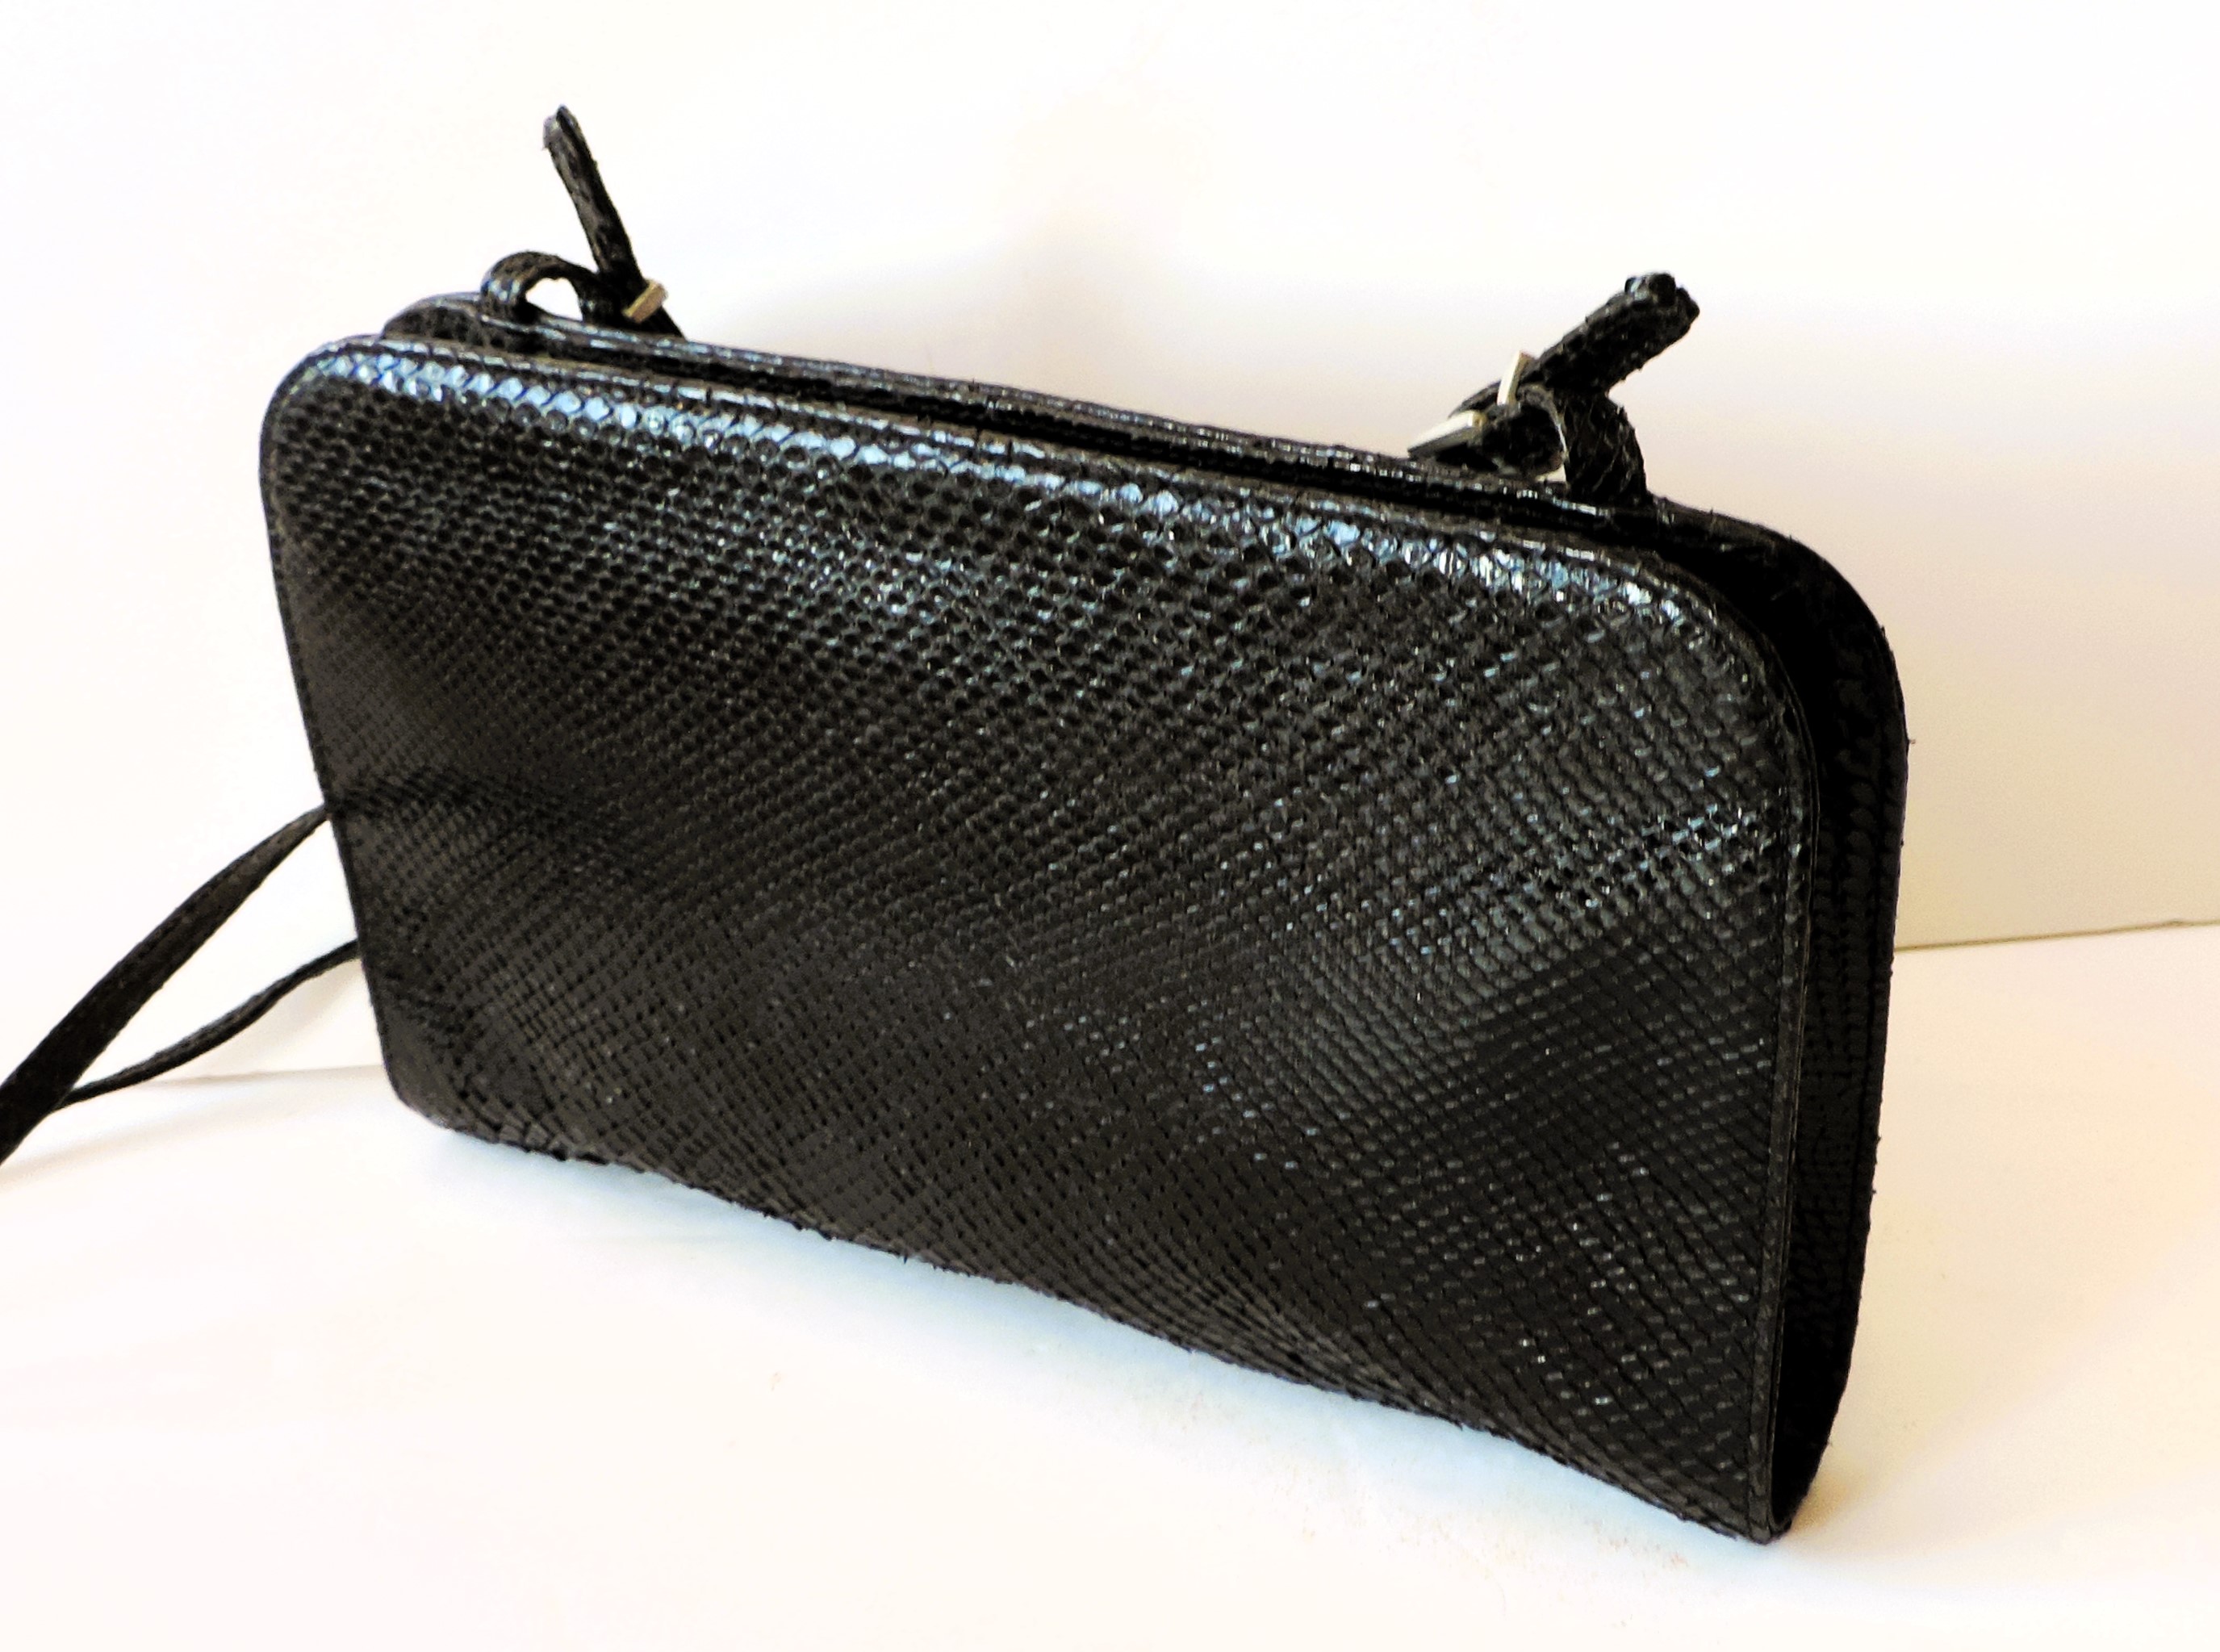 Vintage Giuseppe Zanotti Black Lizard Skin Shoulder Bag - Image 2 of 7